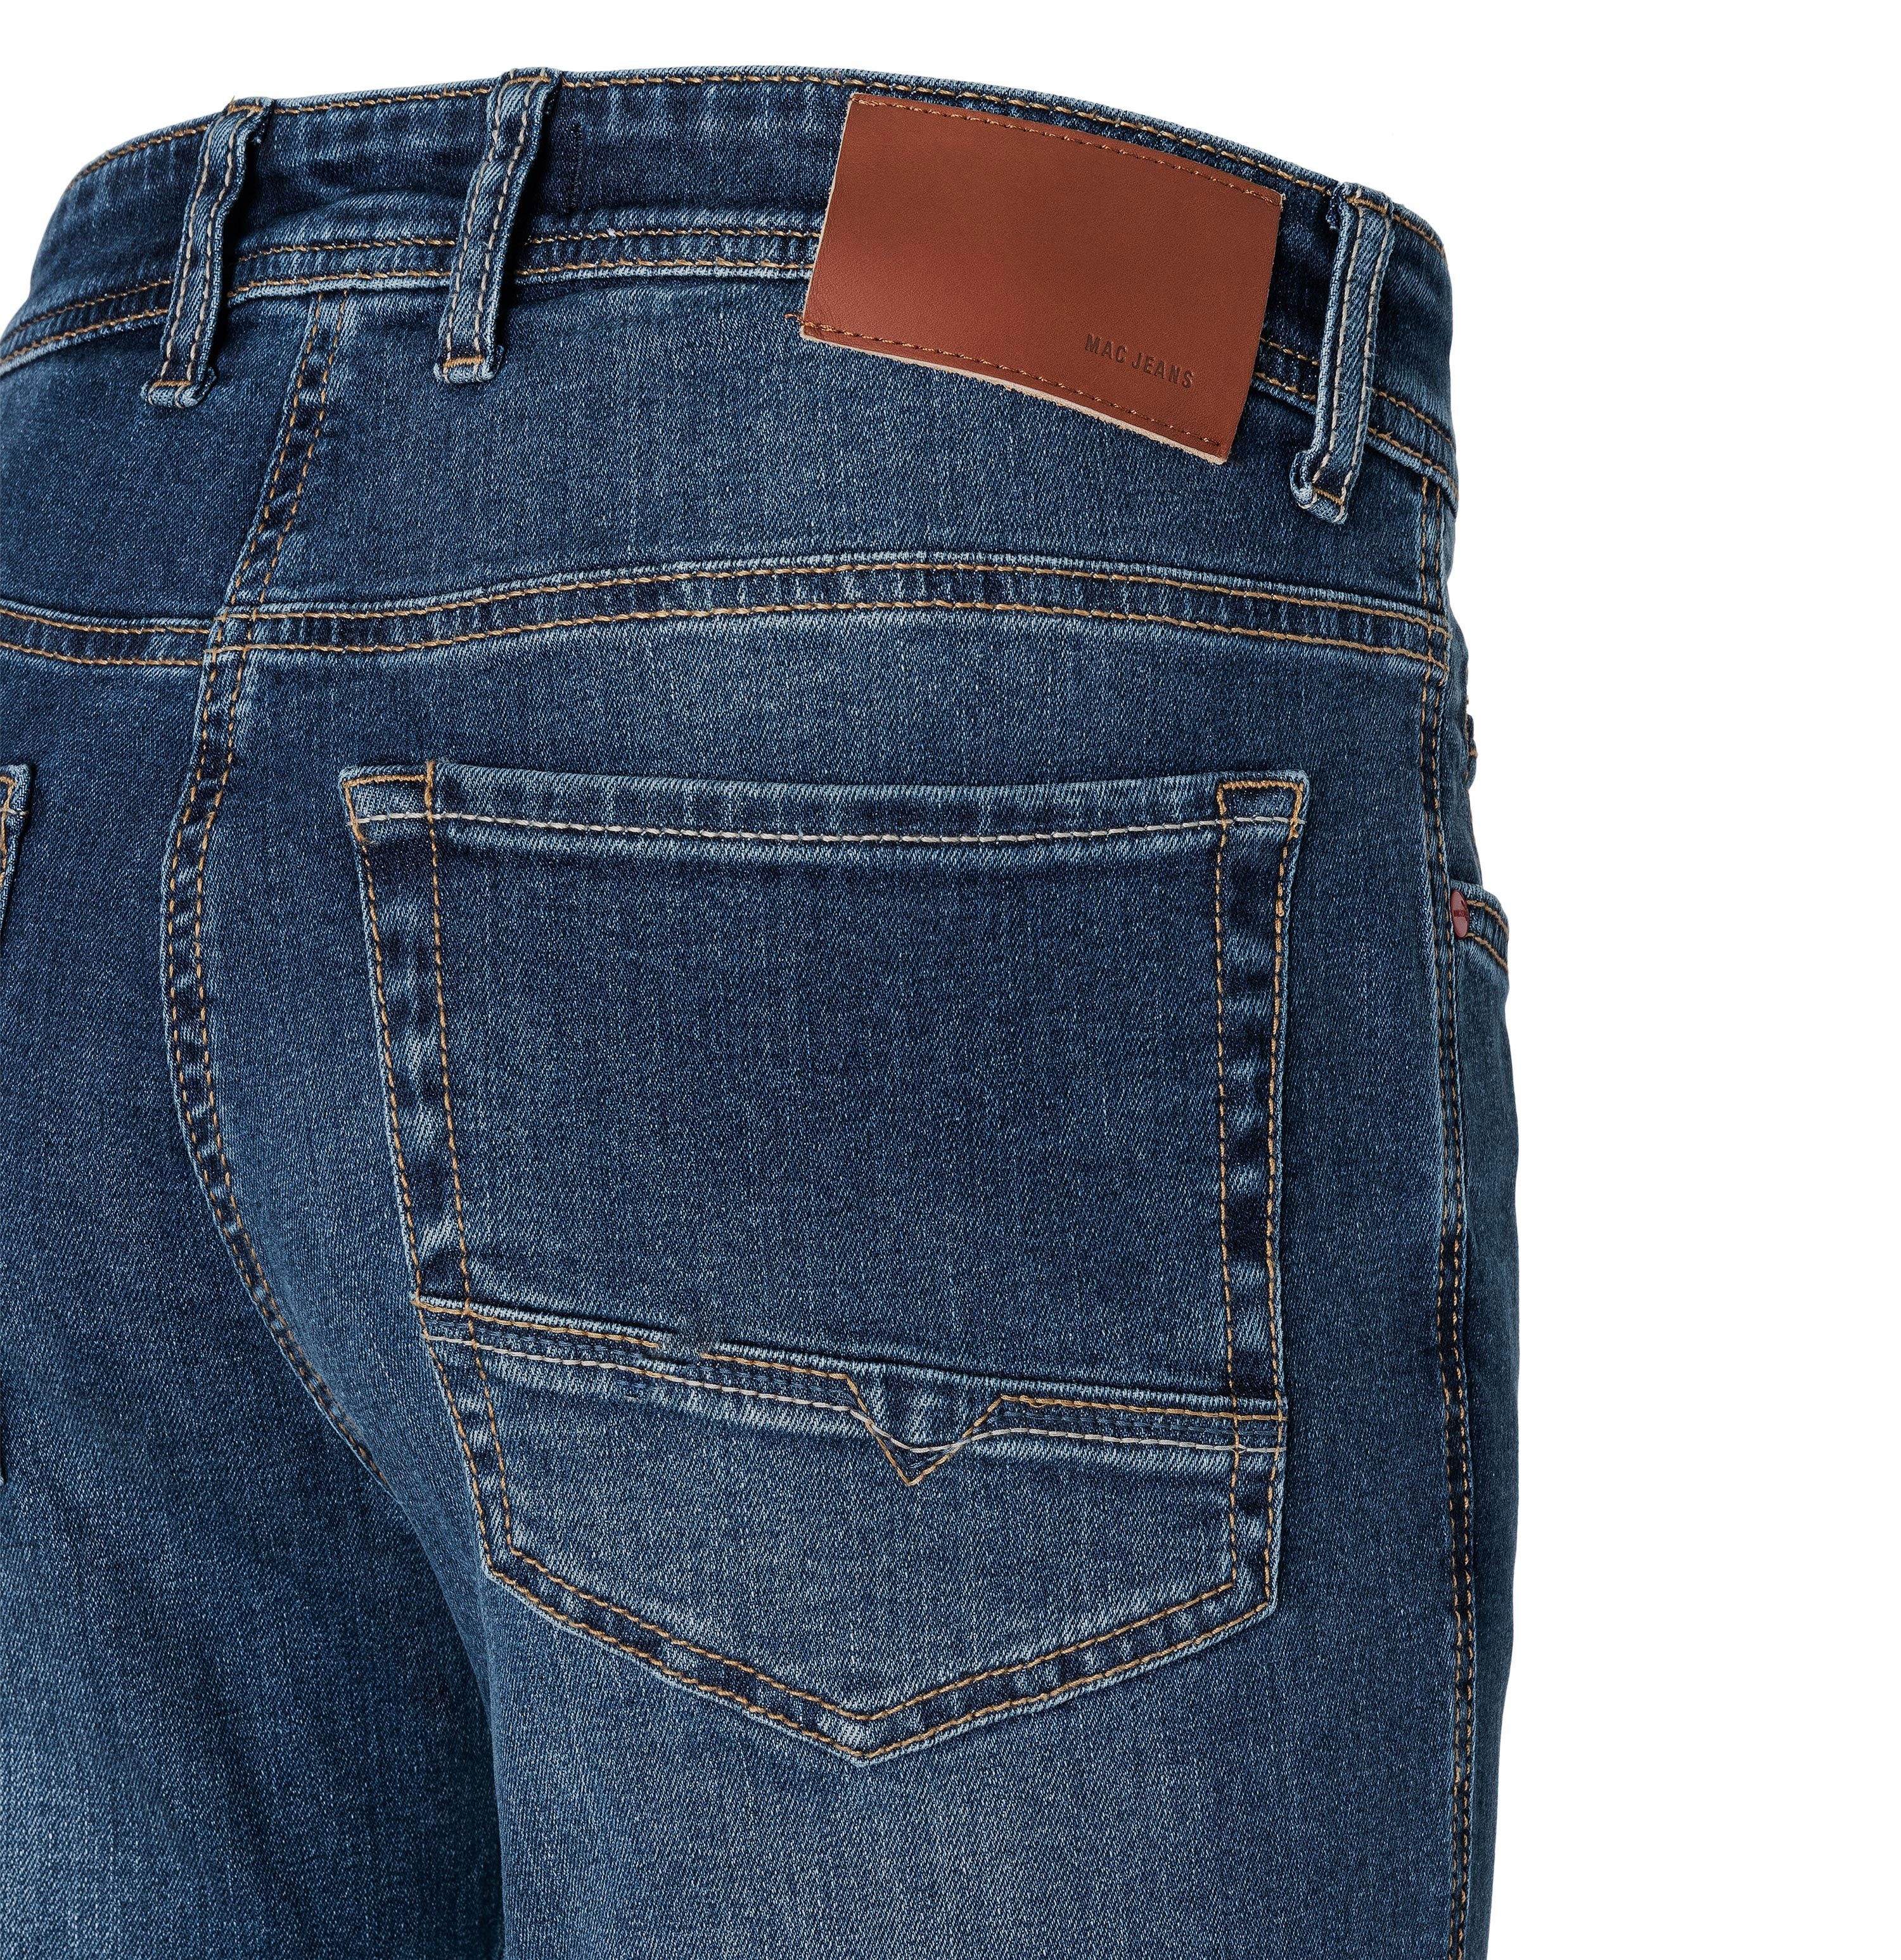 MAC 5-Pocket-Jeans Arne Stretch Denim blue wash authentic navy